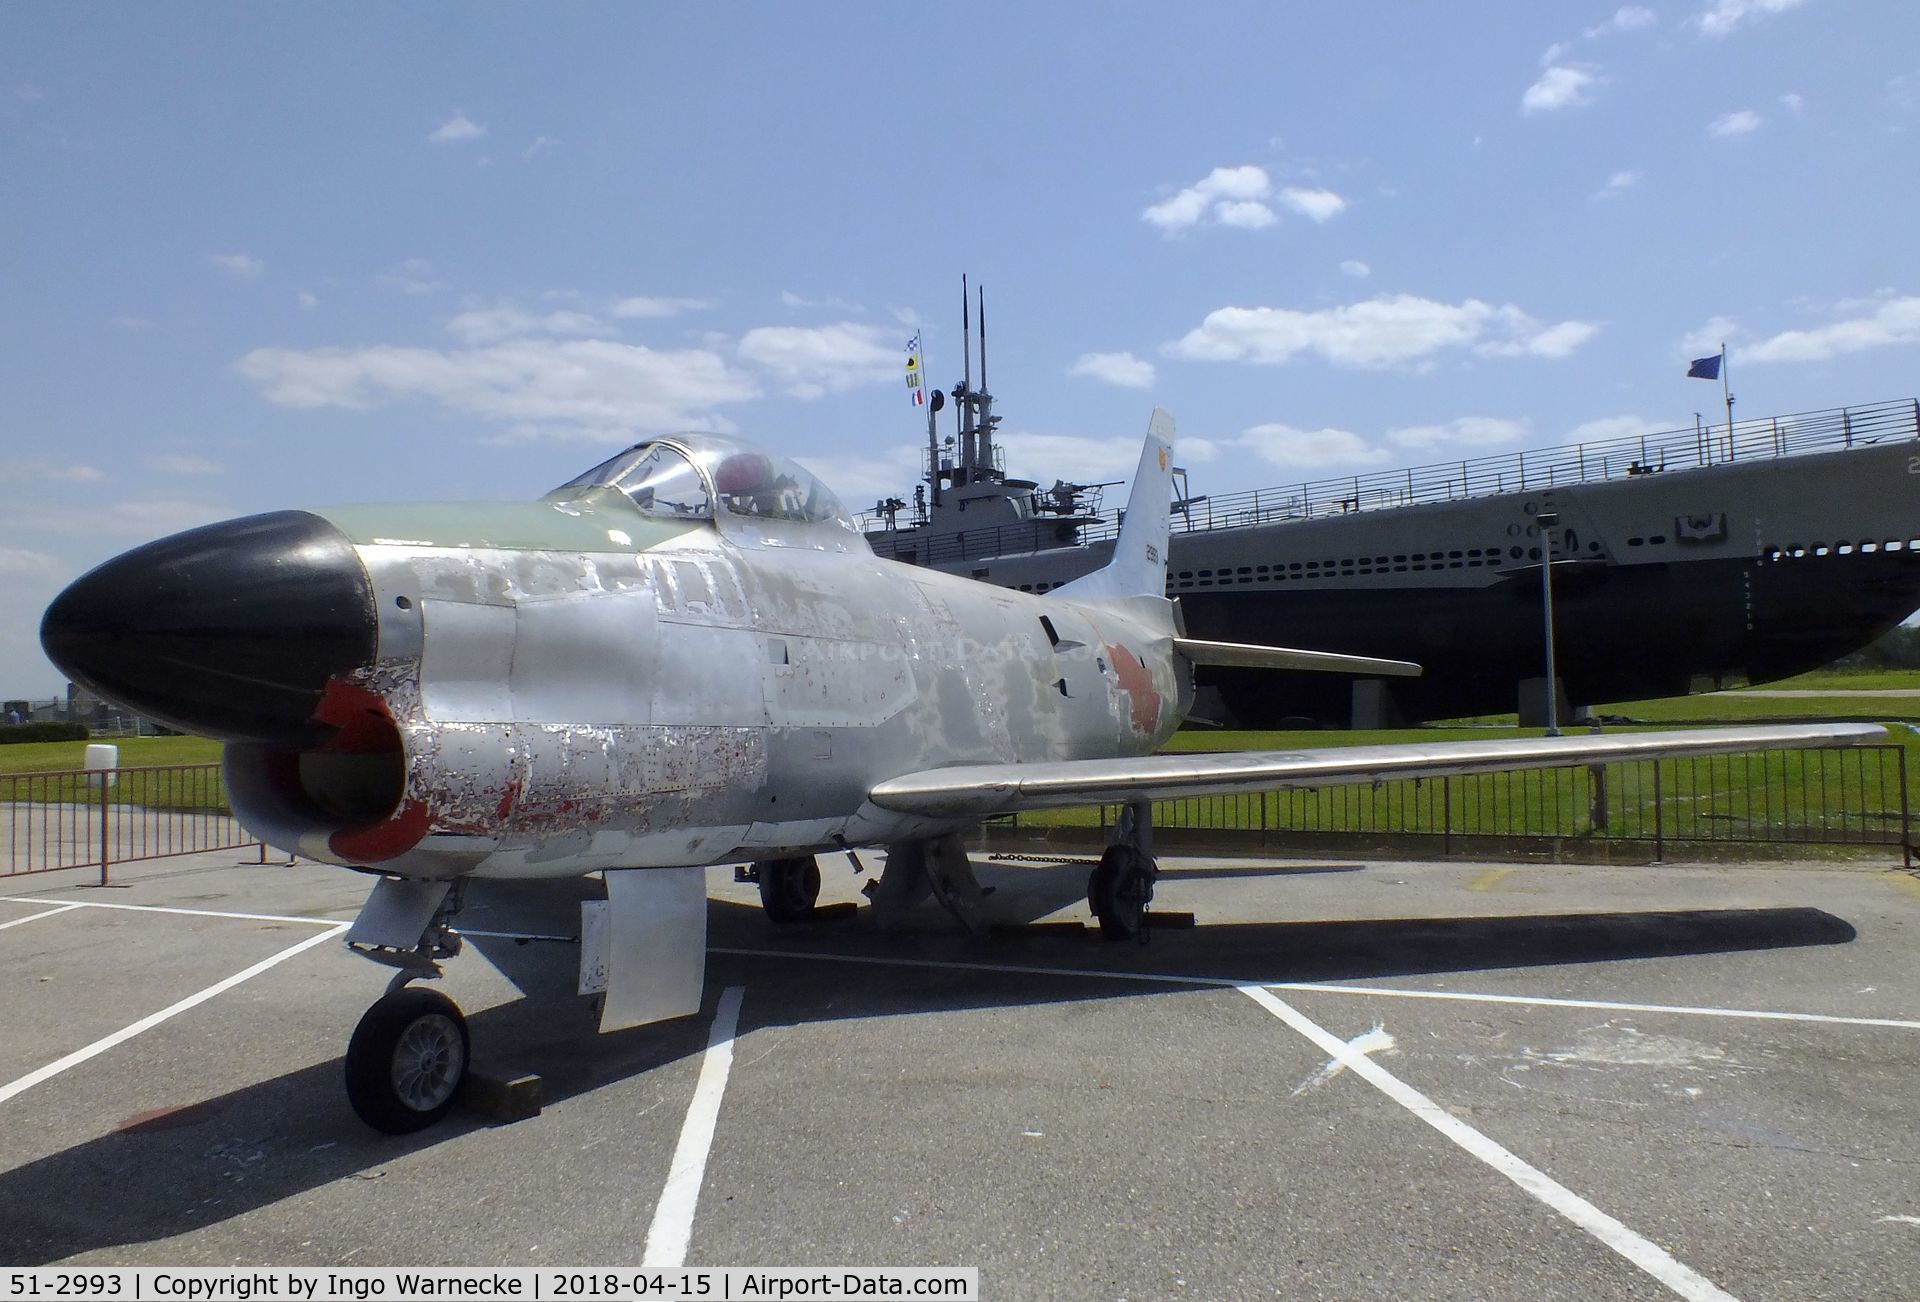 51-2993, North American F-86L Sabre C/N 177-50, North American F-86L Sabre at the USS Alabama Battleship Memorial Park, Mobile AL